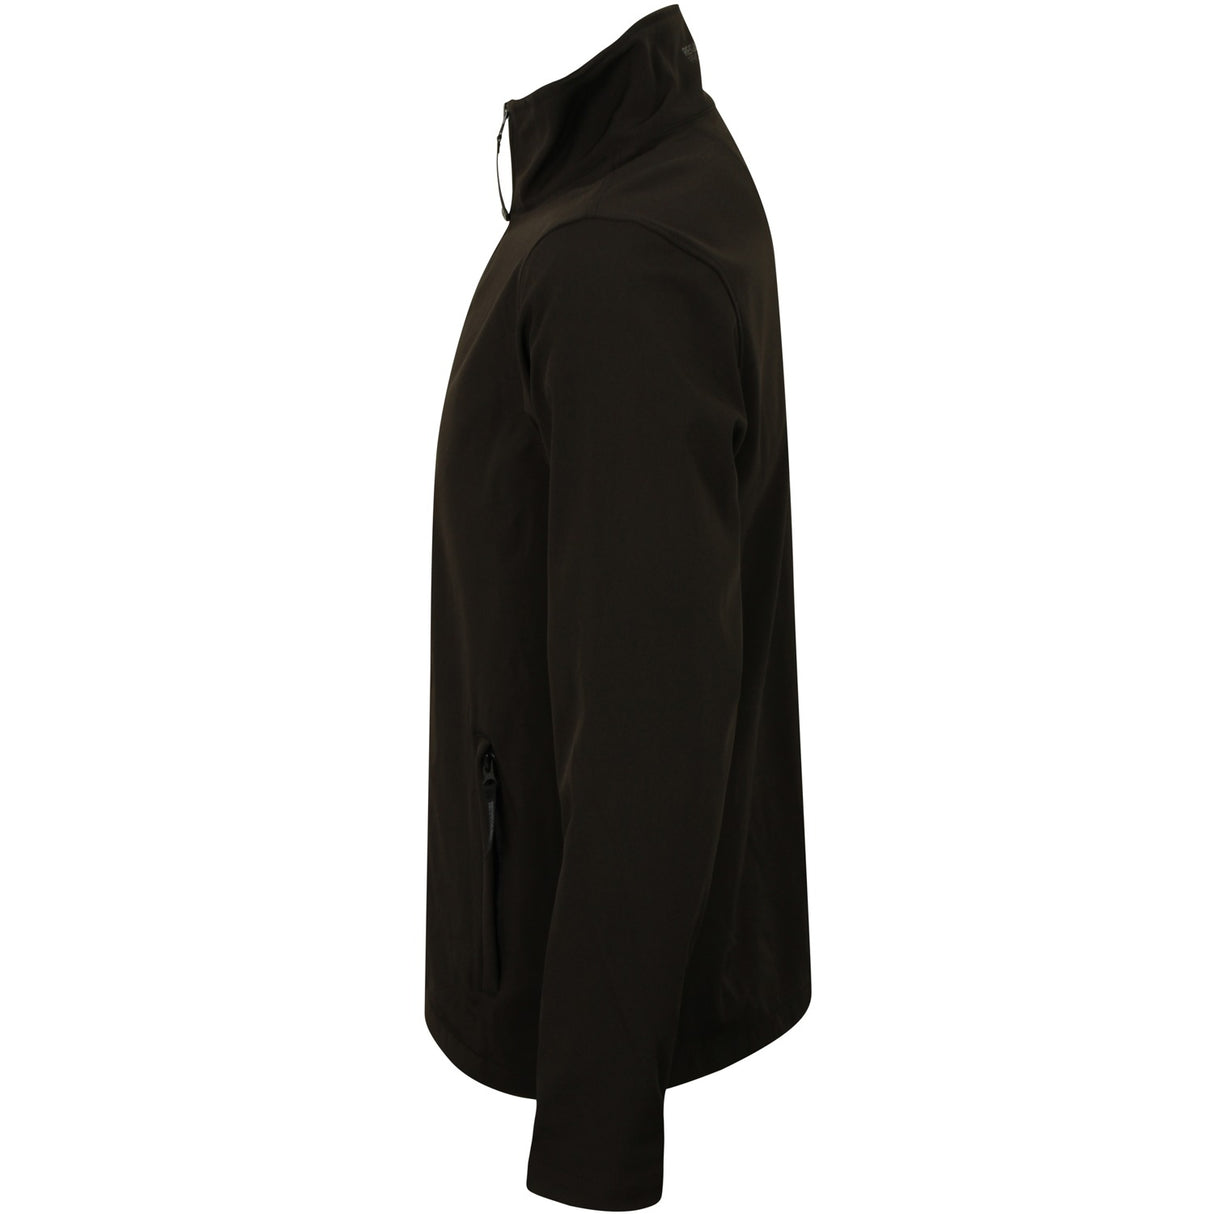 Regatta TRA680 Classic Softshell Fleece Jacket Black